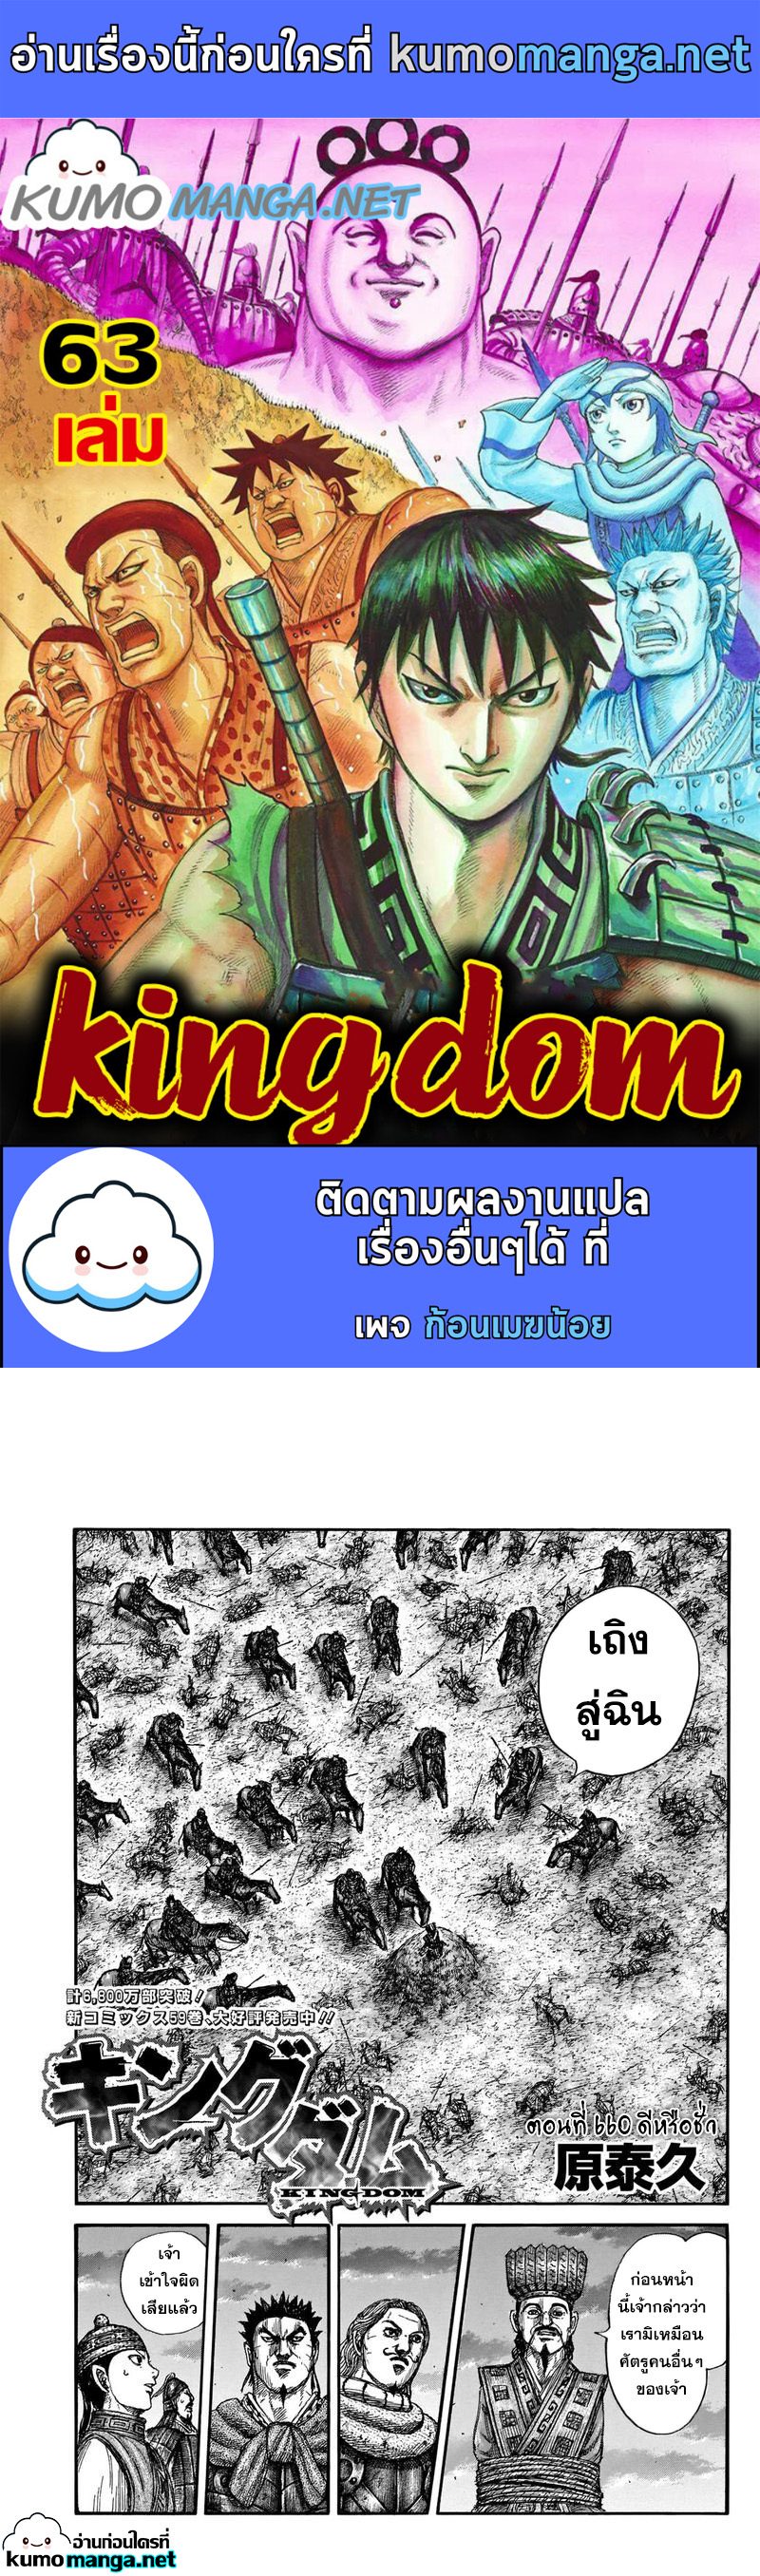 Kingdom 660 (1)